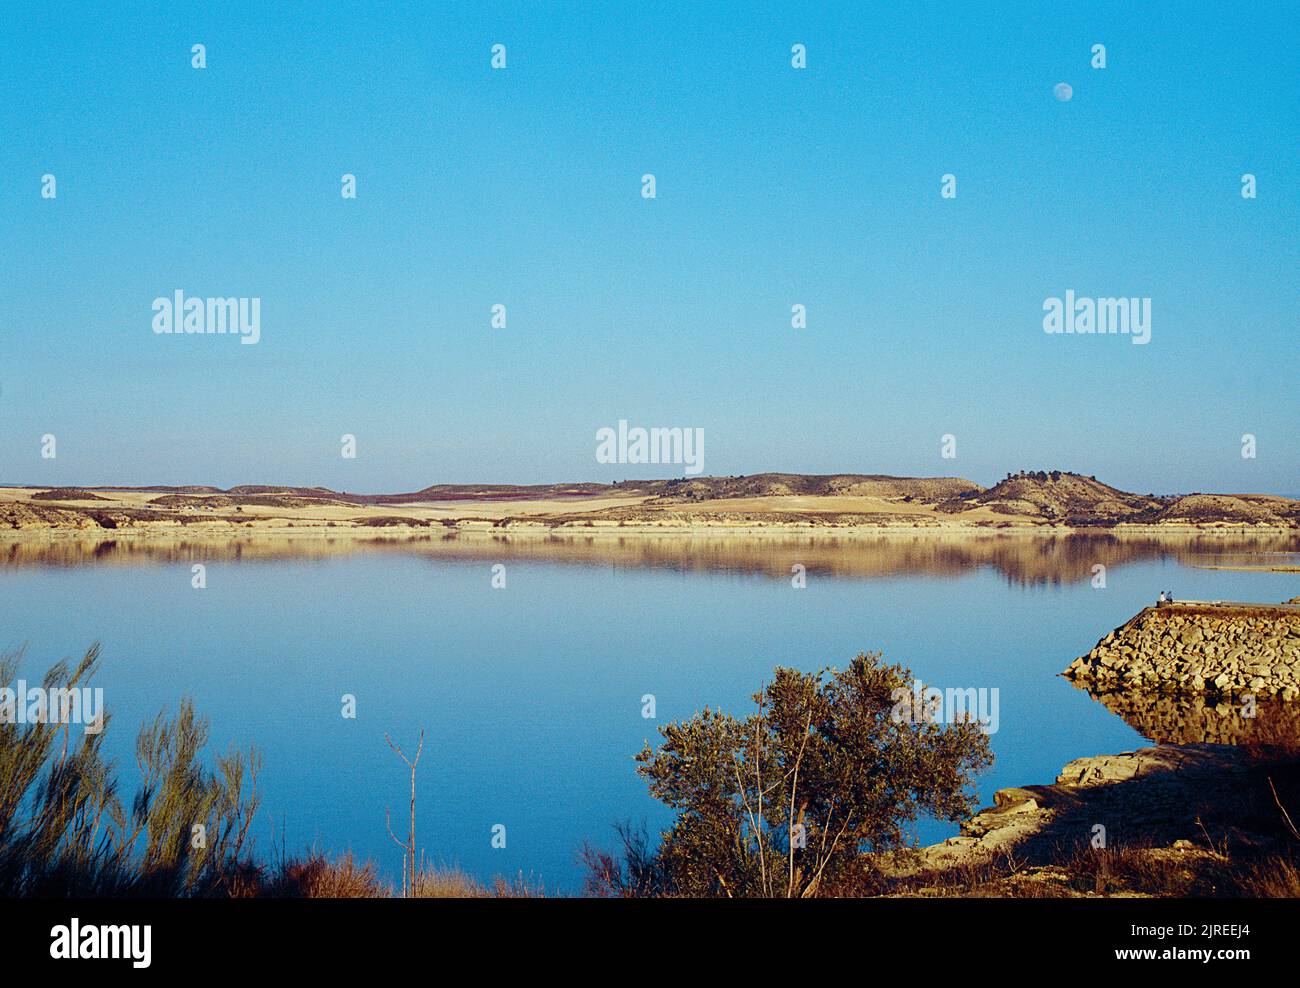 Mequinenza reservoir. Caspe, Zaragoza province, Aragon, Spain. Stock Photo